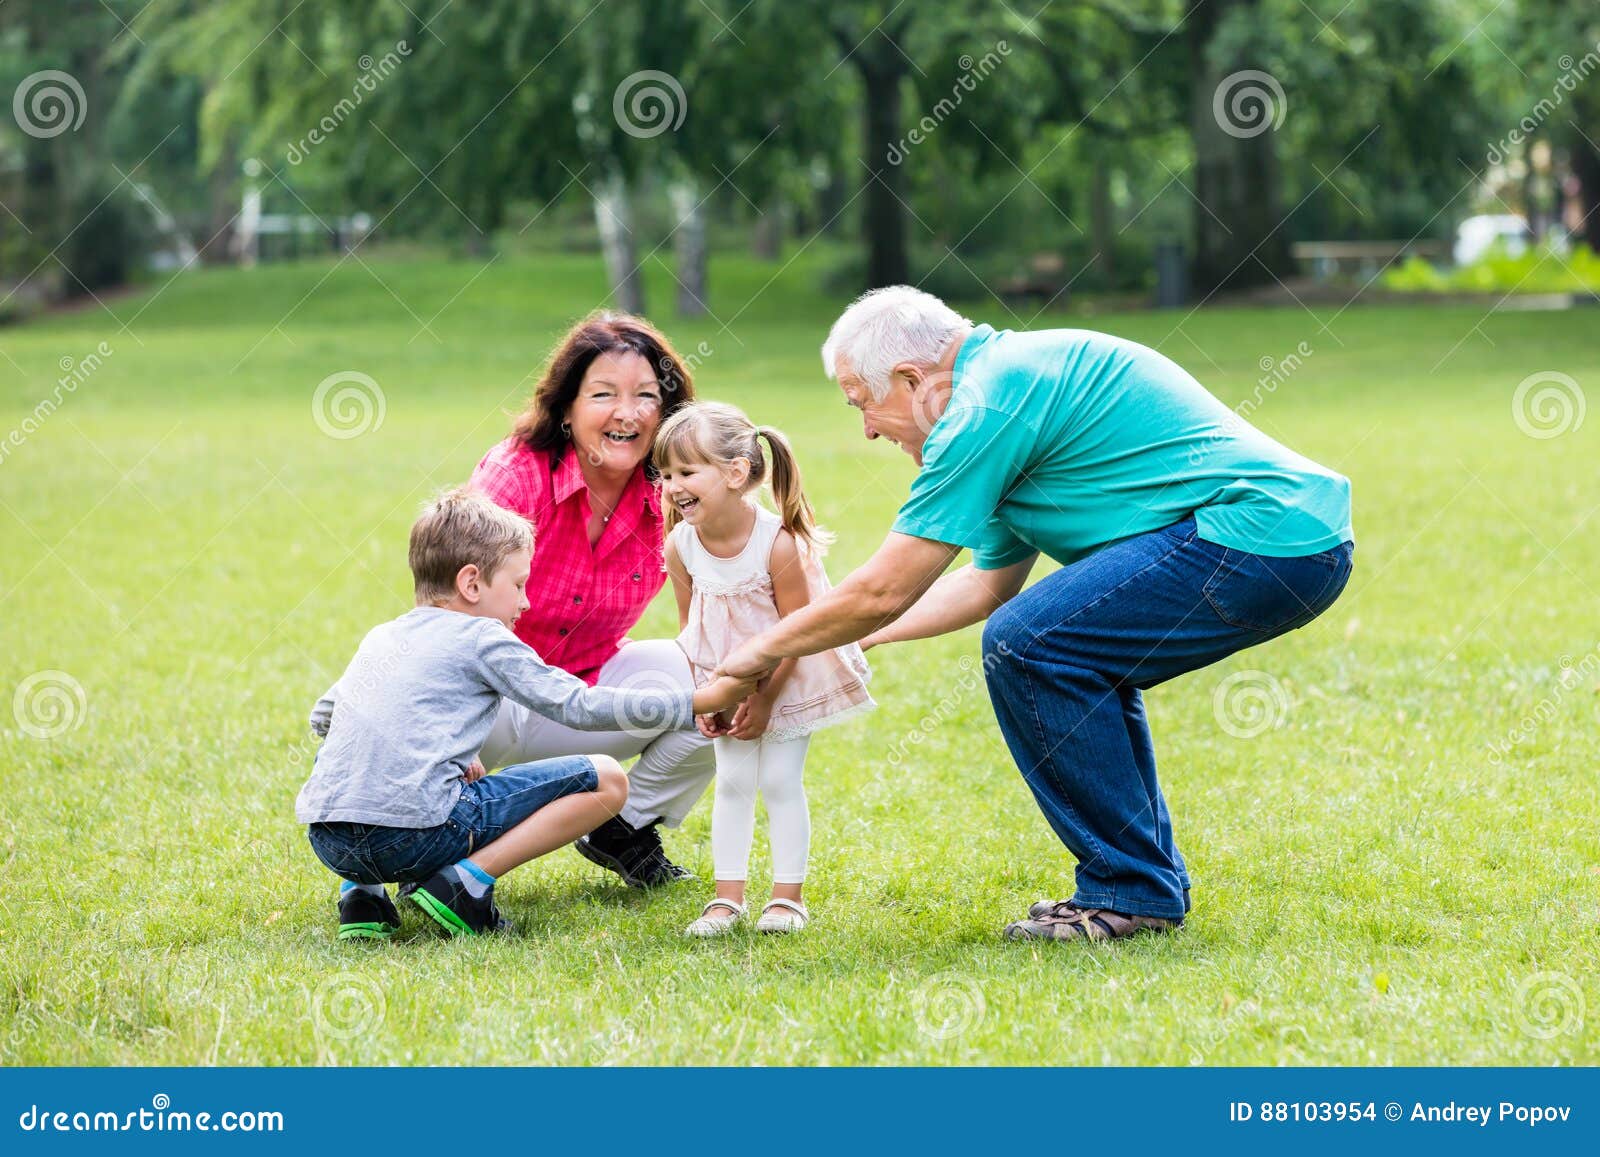 happy grandparent and grandchildren in park